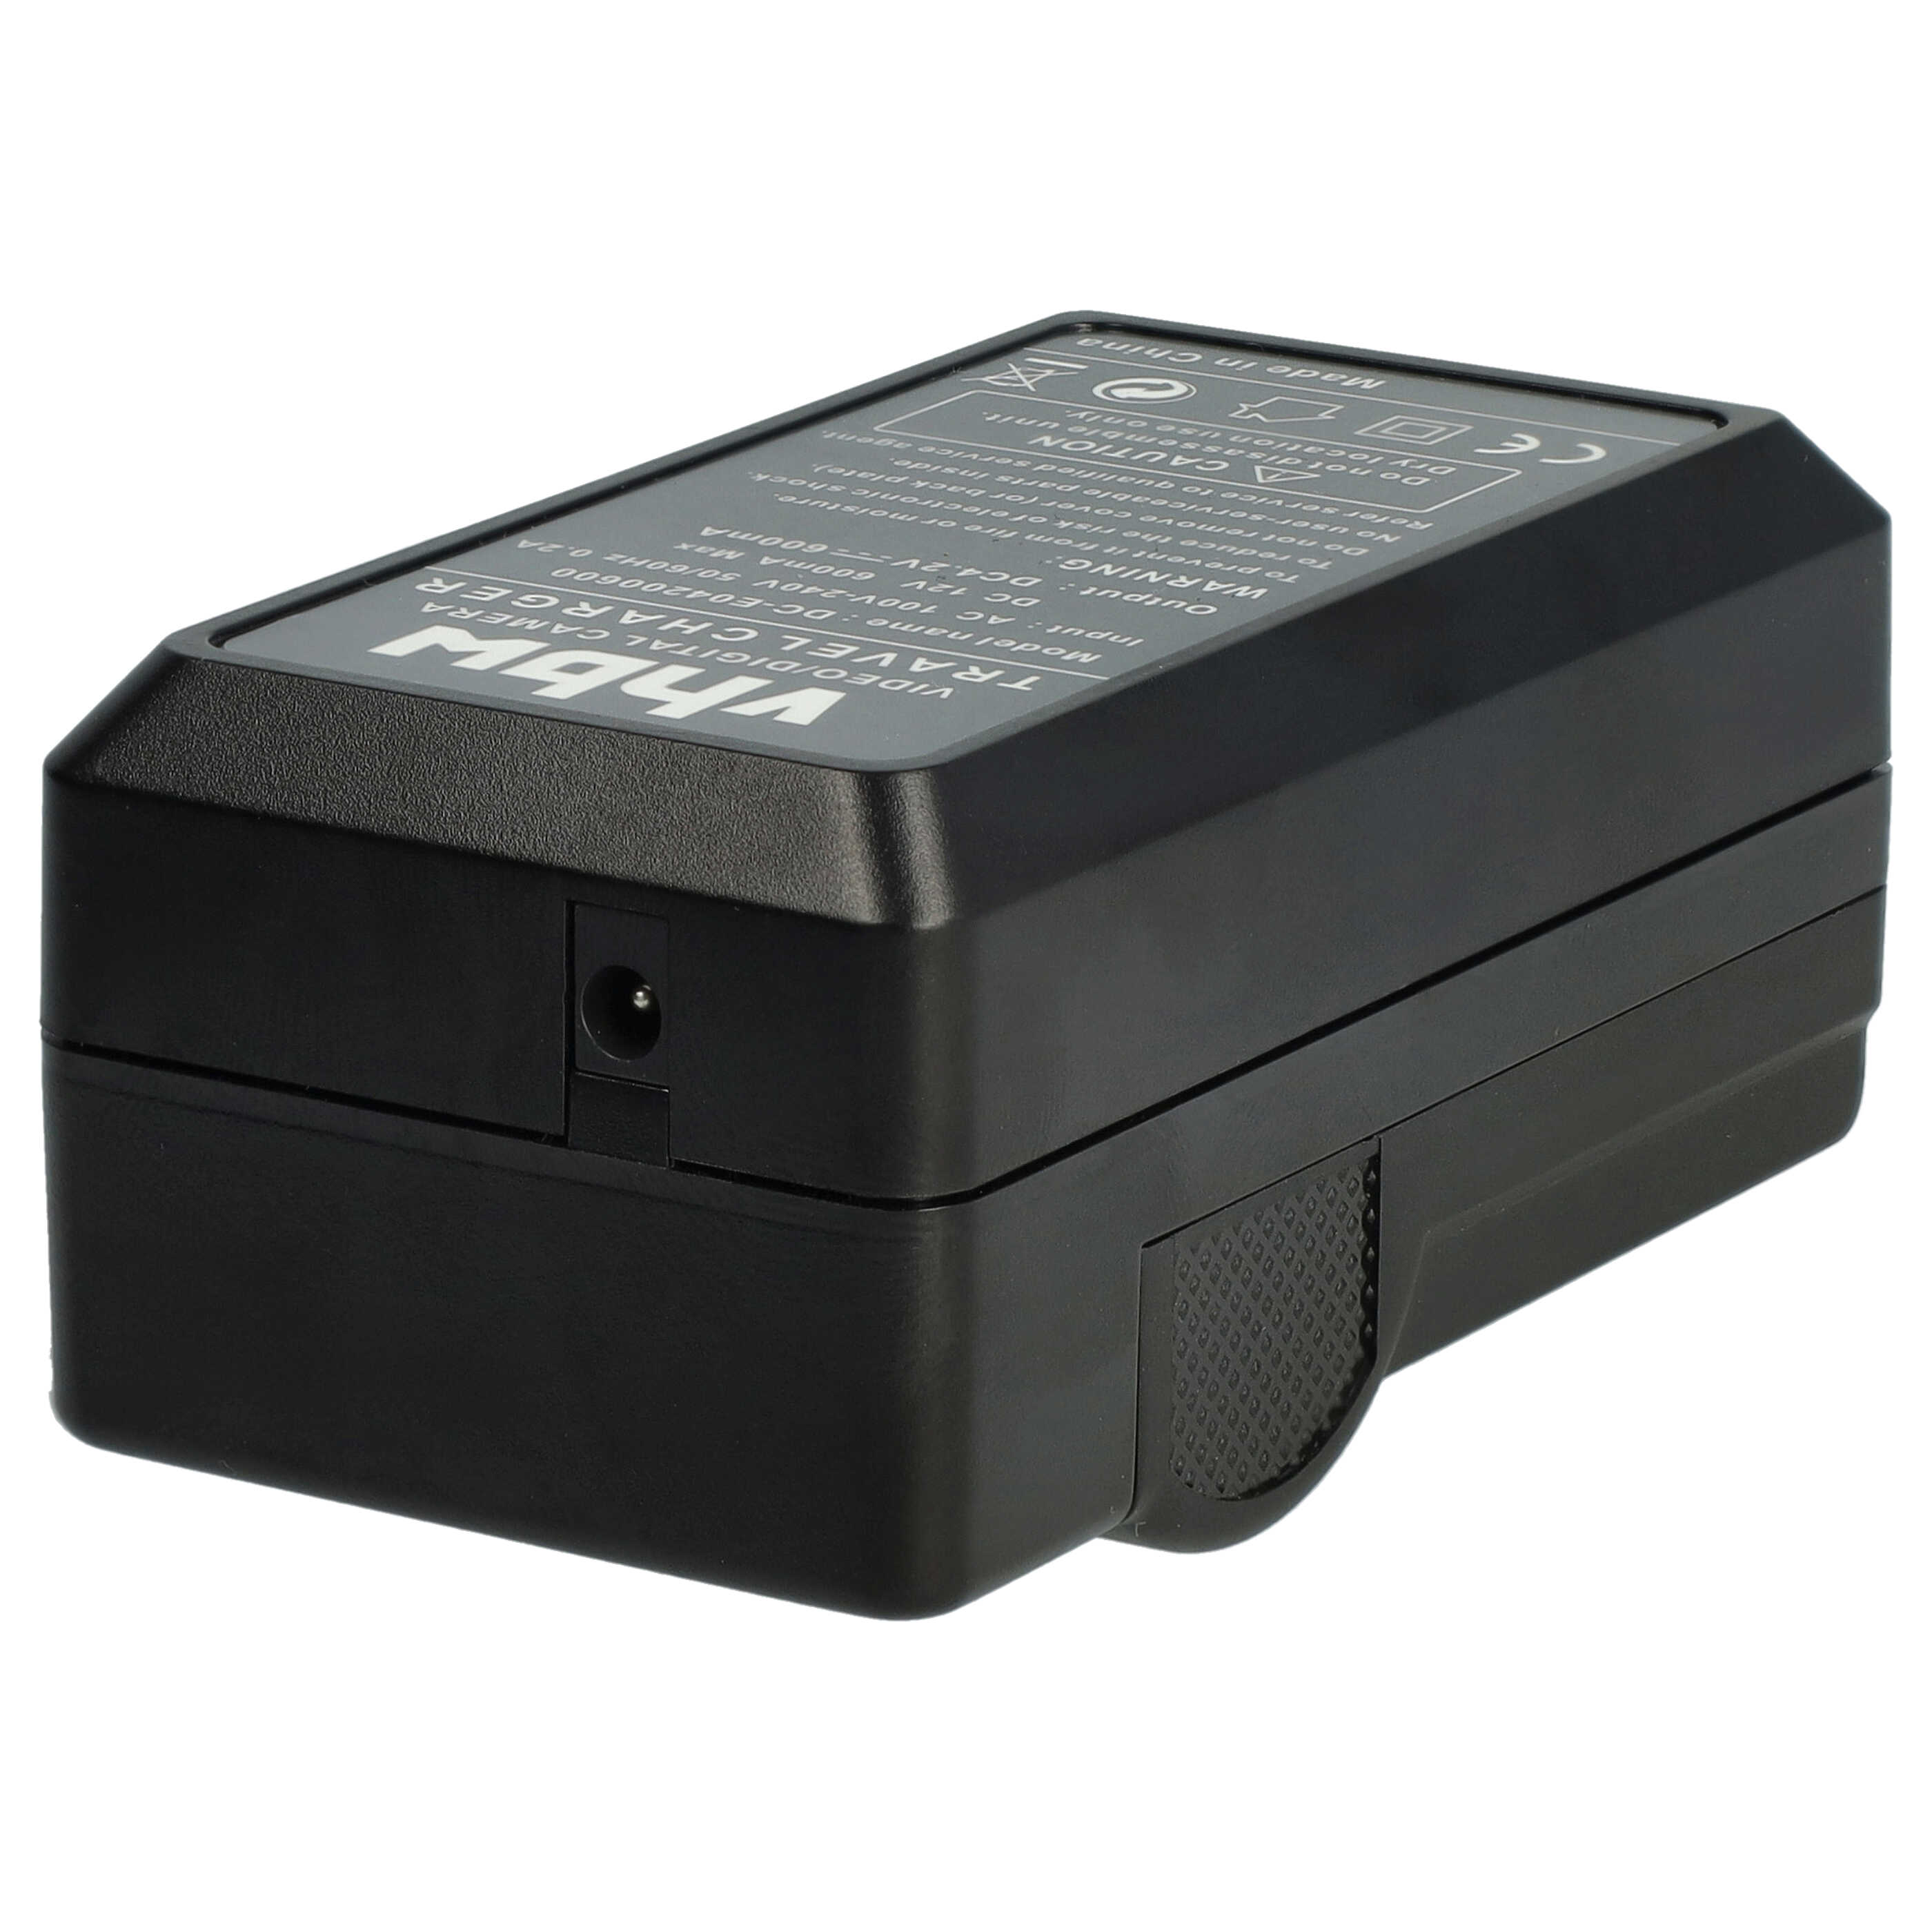 Akku Ladegerät passend für Lumix DMC-FH2 Kamera u.a. - 0,6 A, 4,2 V